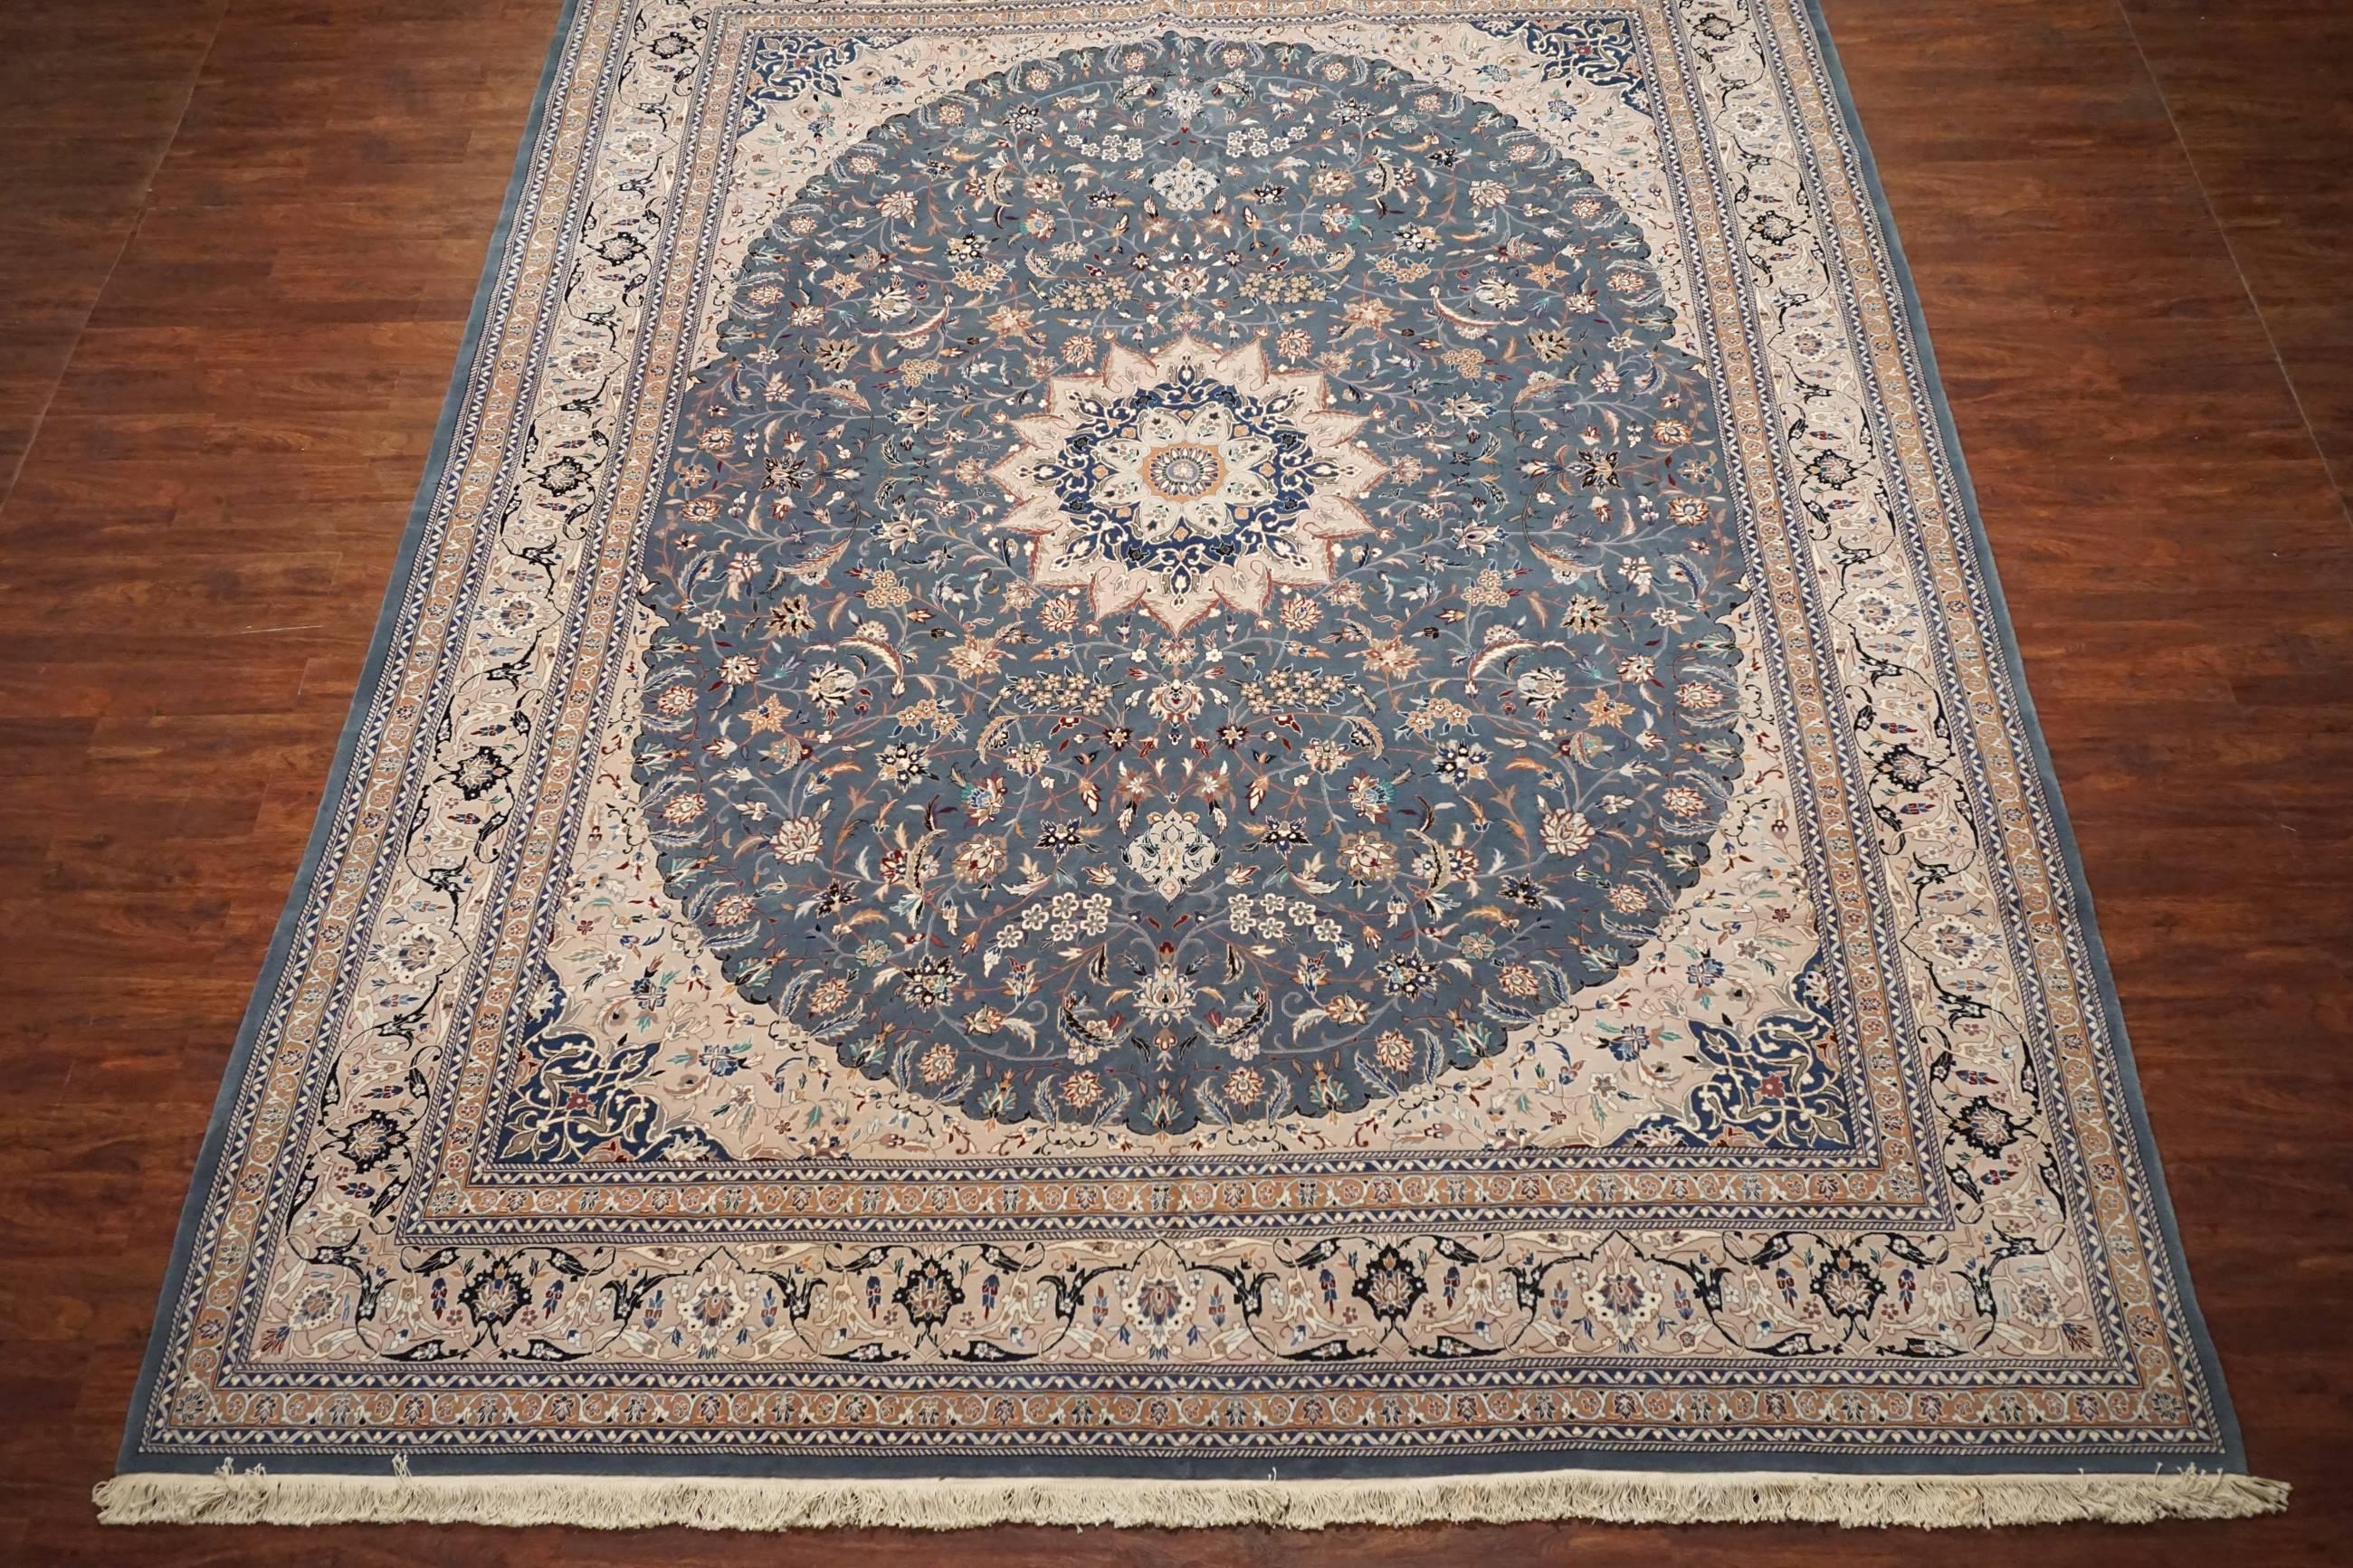 Oversized Persian Nain rug

circa 1970

Measures: 14' 10